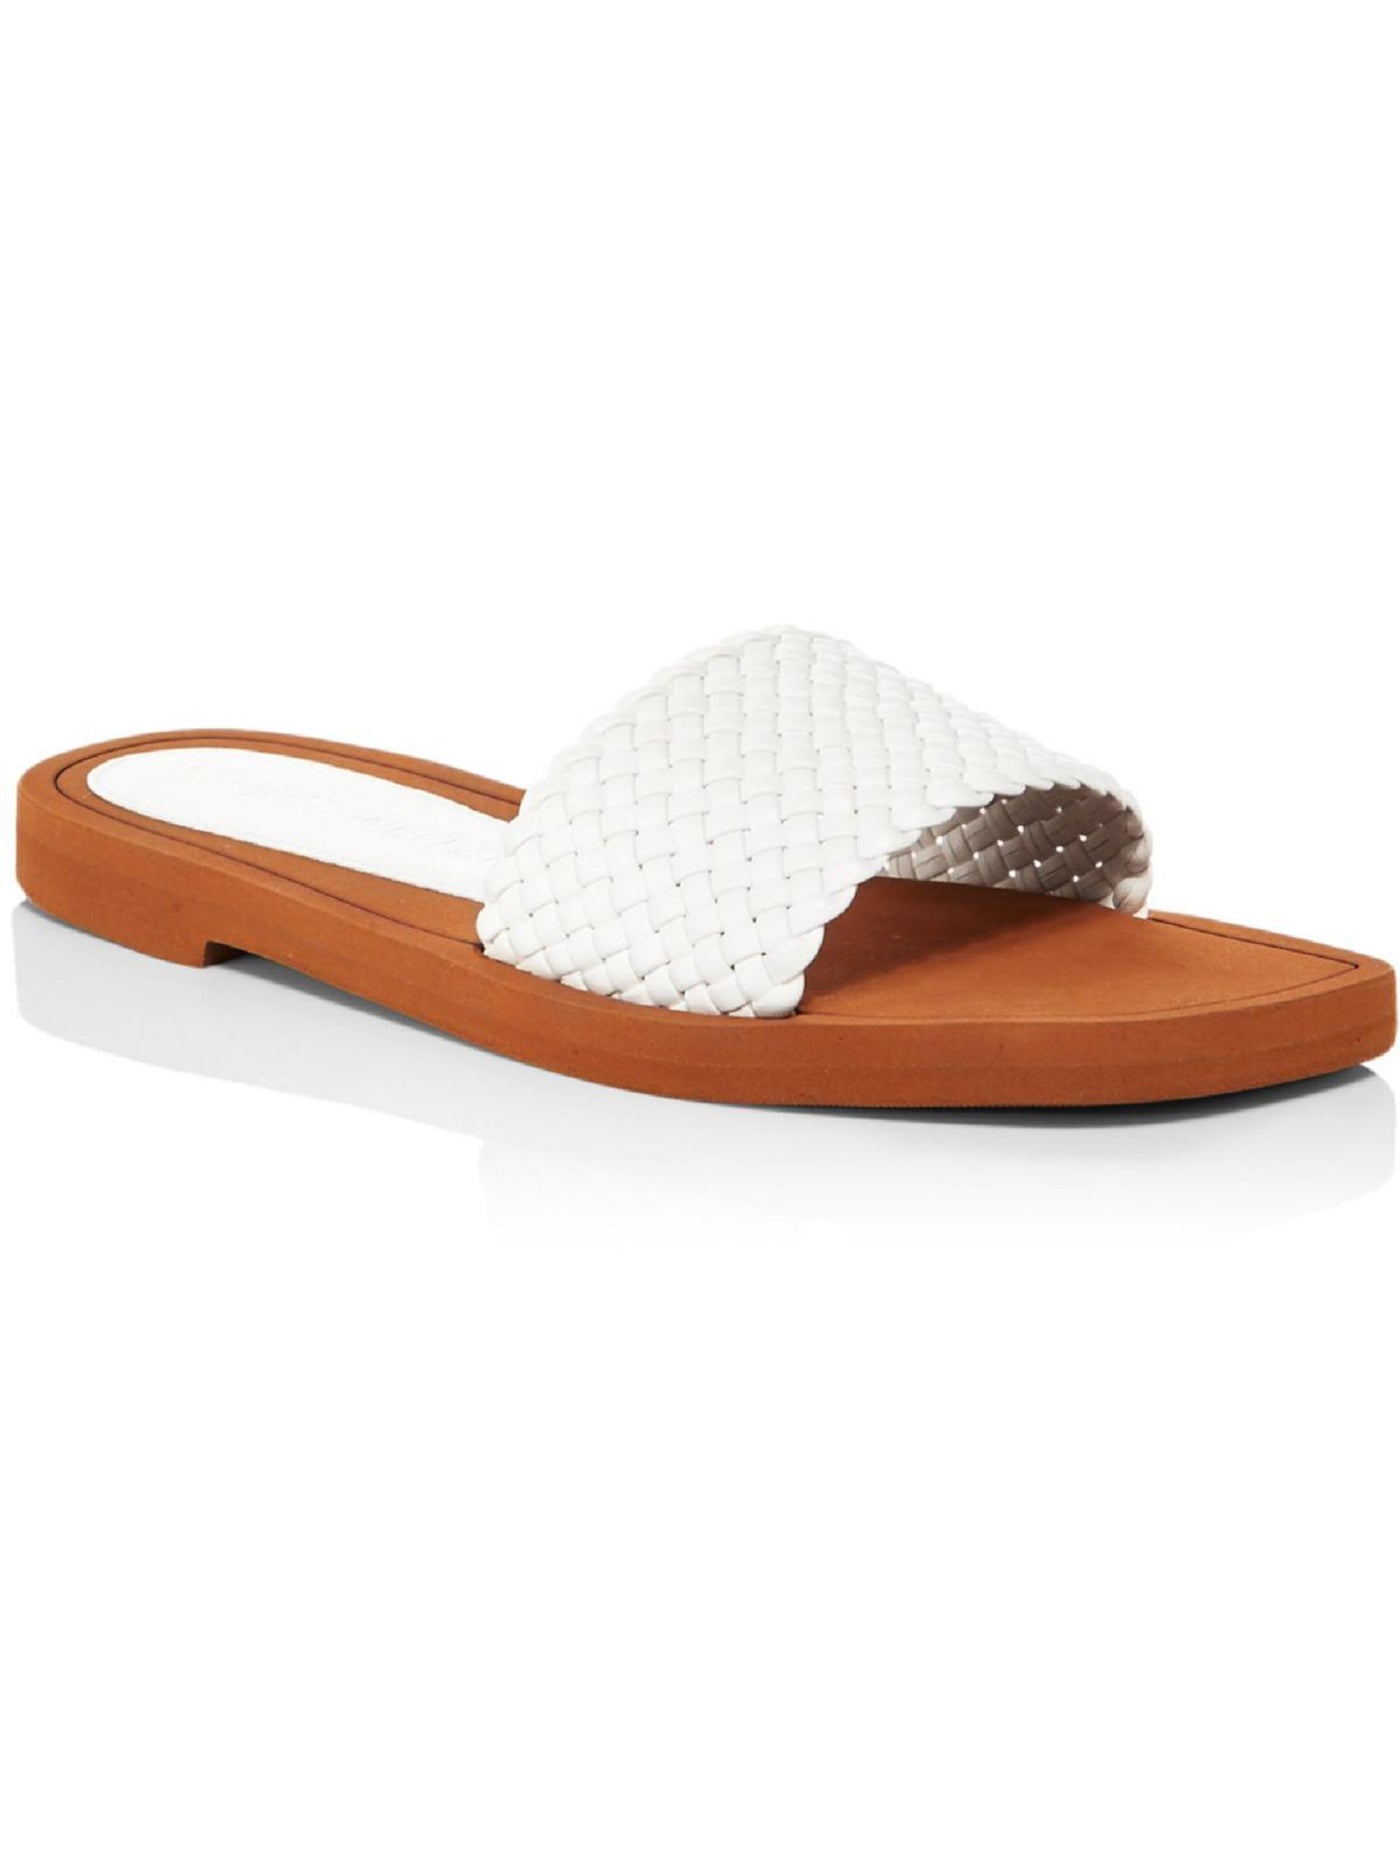 STUART WEITZMAN Womens White Woven Breathable Wova Square Toe Slip On Leather Slide Sandals Shoes 8 B